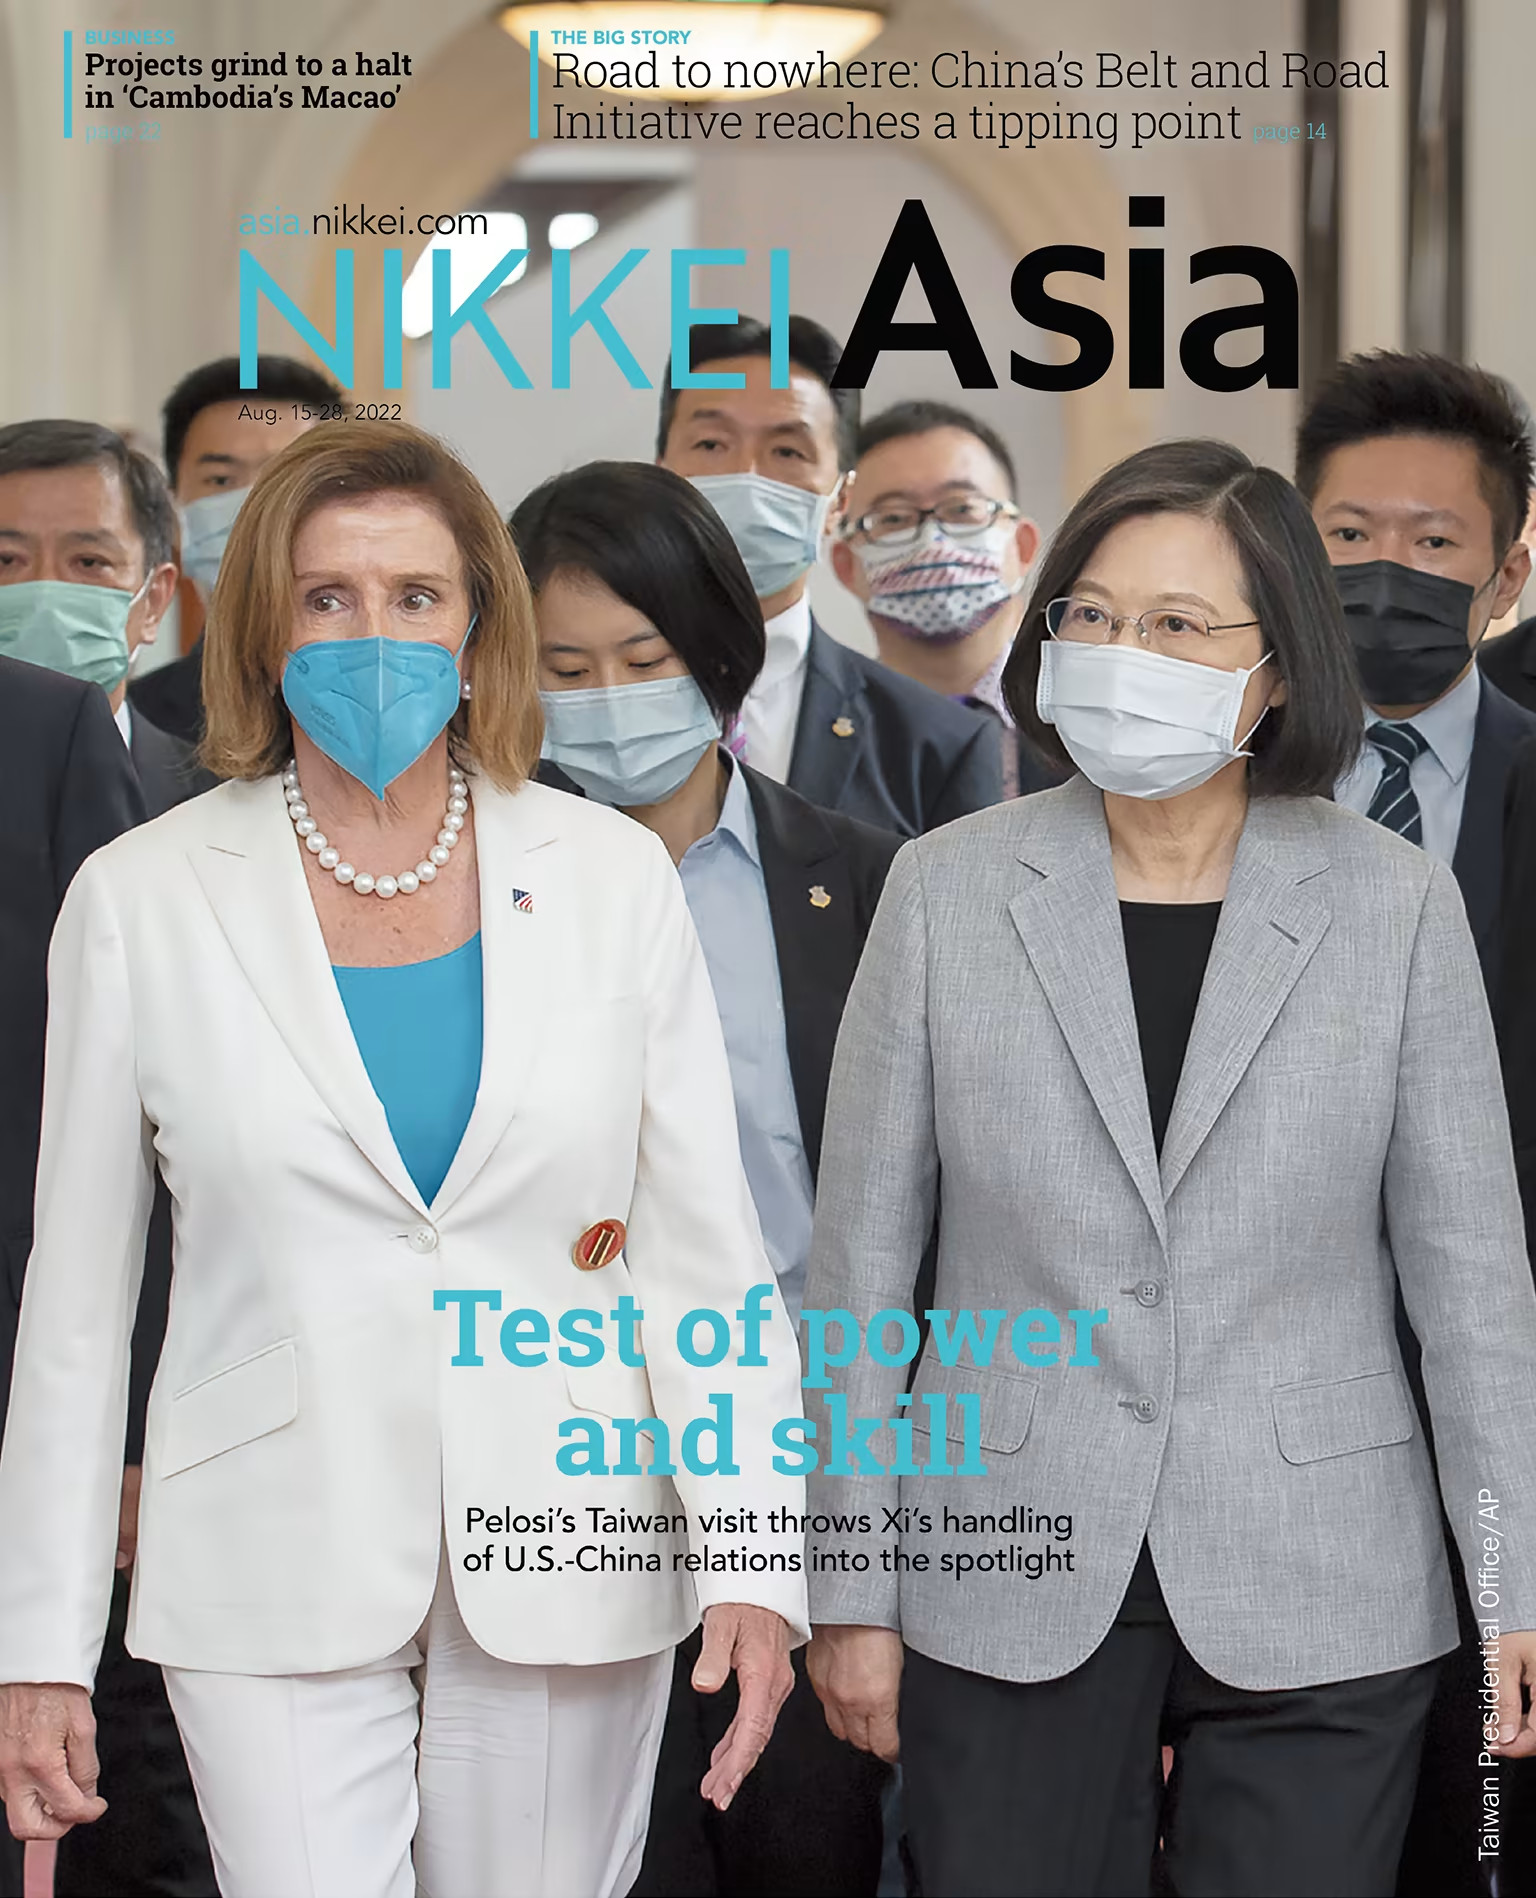 Nikkei Asian Review: Nikkei Asia - 2022: TEST OF POWER AND SKILL - 33.22 tạp chí kinh tế nước ngoài, nhập khẩu từ Singapore